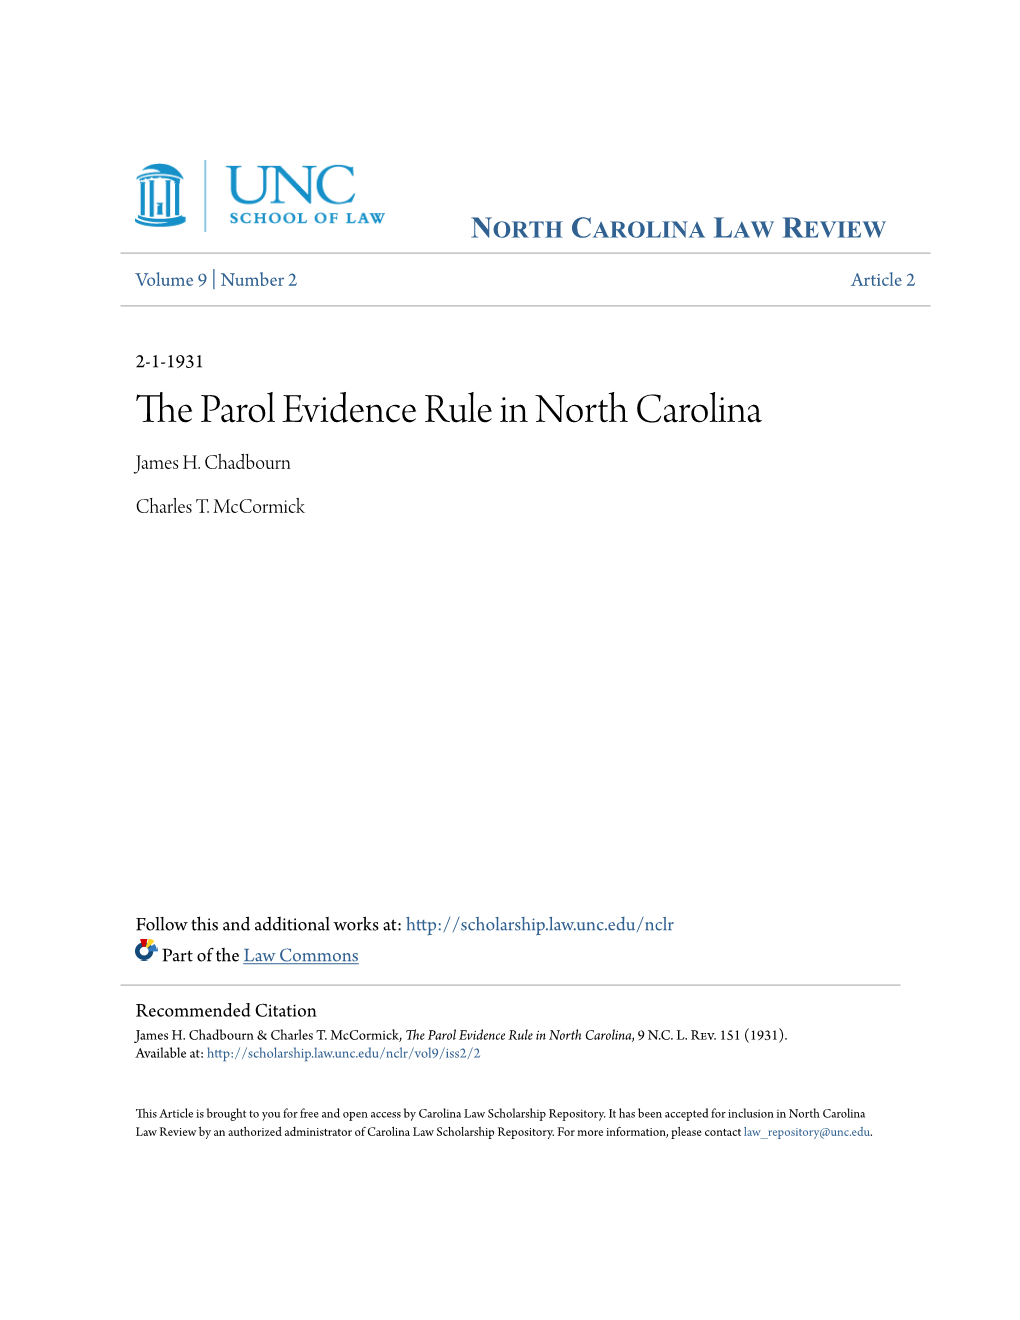 The Parol Evidence Rule in North Carolina, 9 N.C